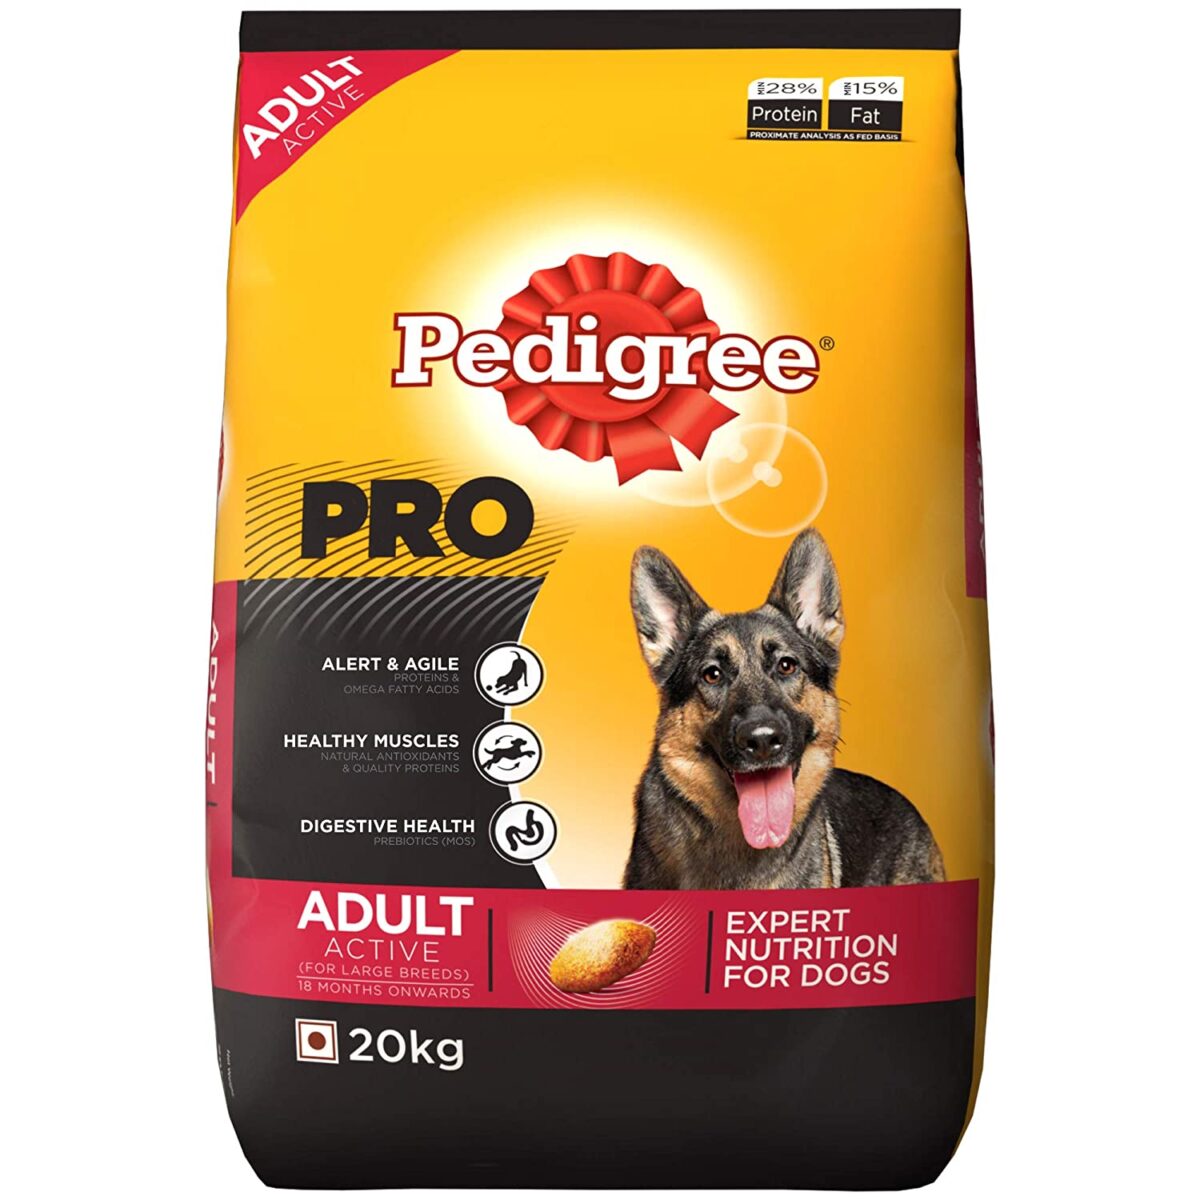 Pedigree PRO Expert Nutrition Active Adult Large Breed Dogs (18 Months Onwards) Dry Dog Food 20kg Pack